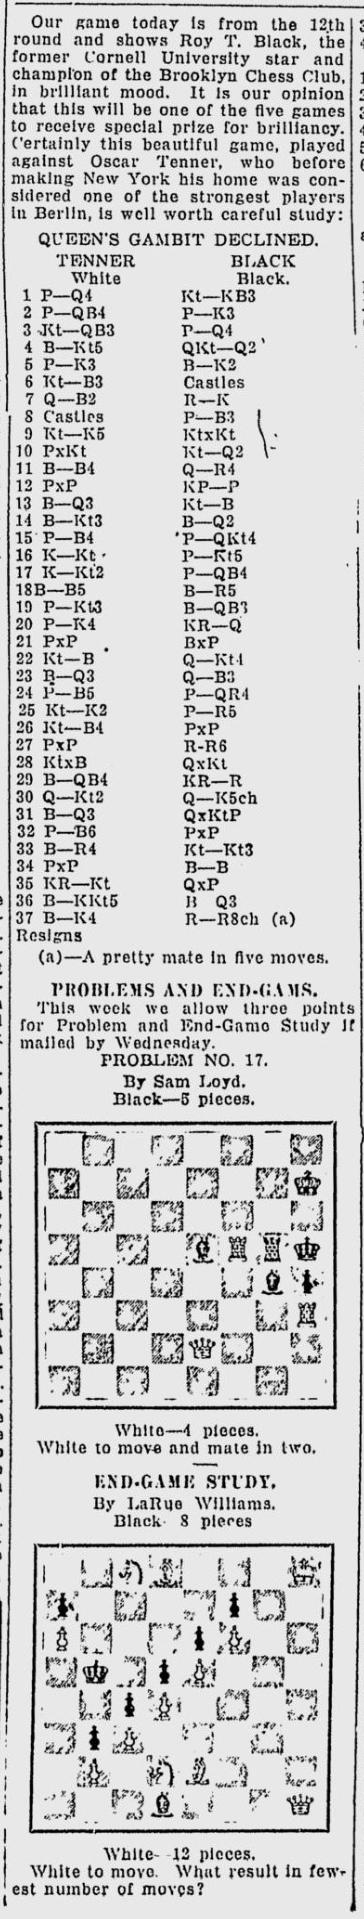 1923.08.25-09 Providence News.jpg